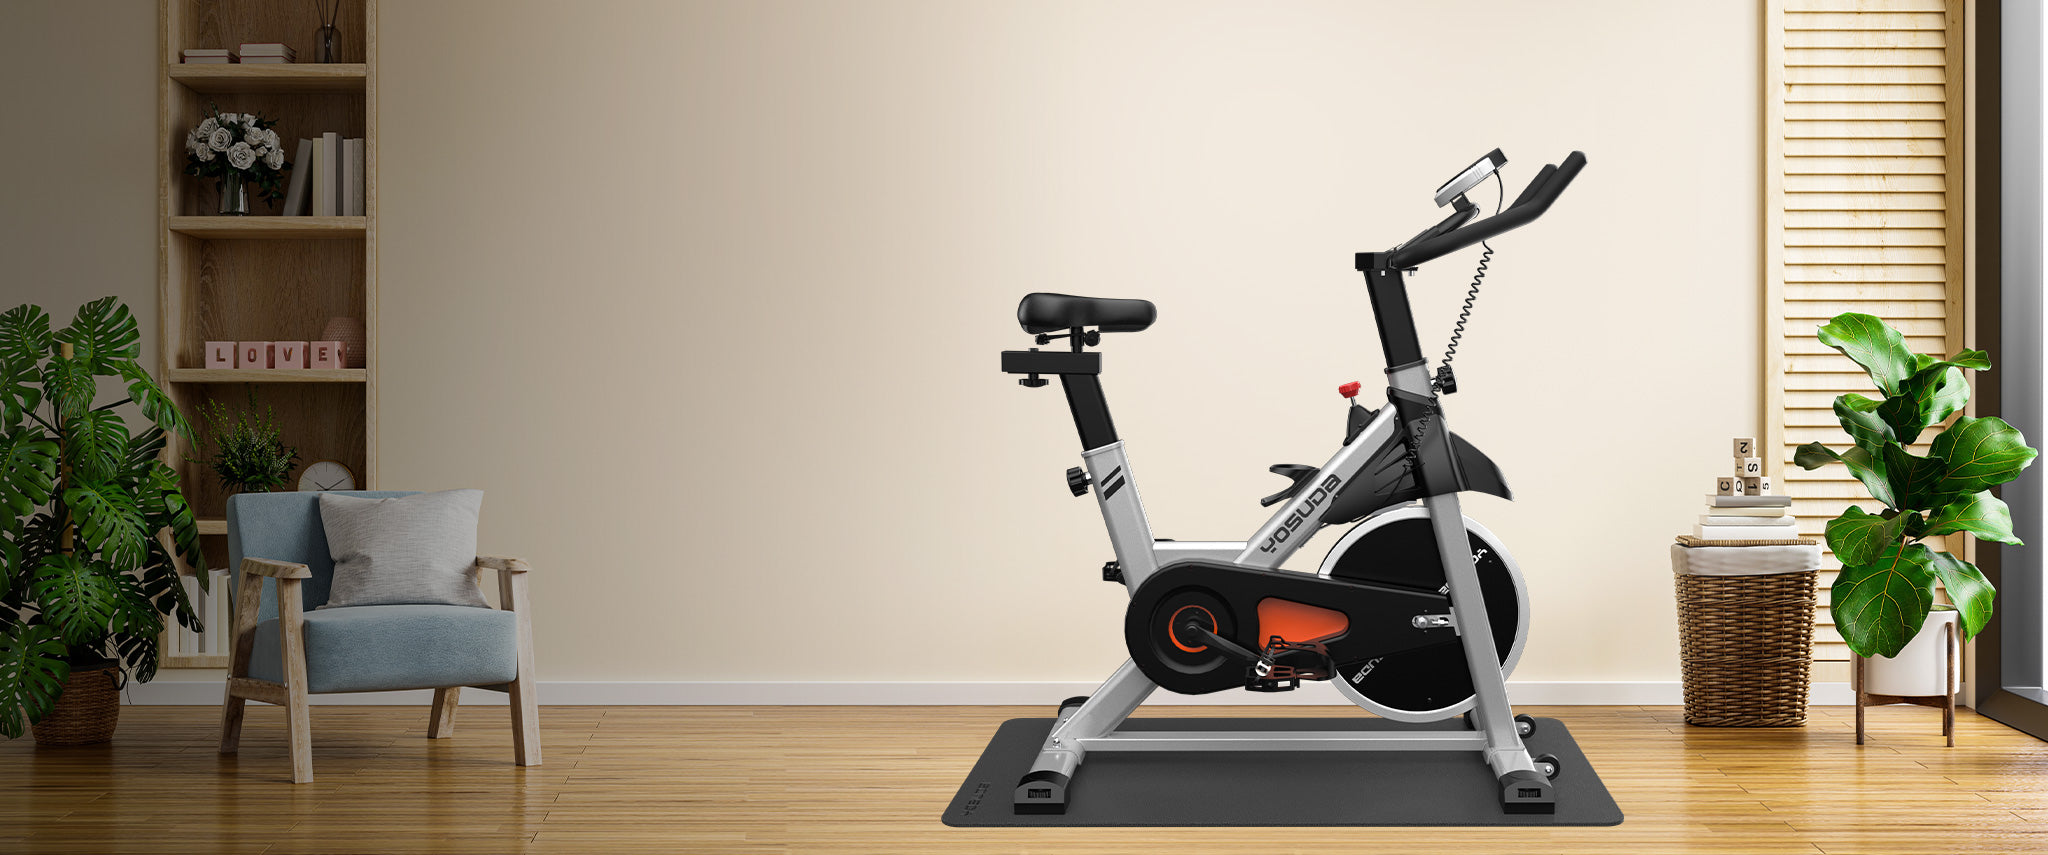 YOSUDA Indoor Exercise Bikes Rowing Machine Elliptical for Home Gym